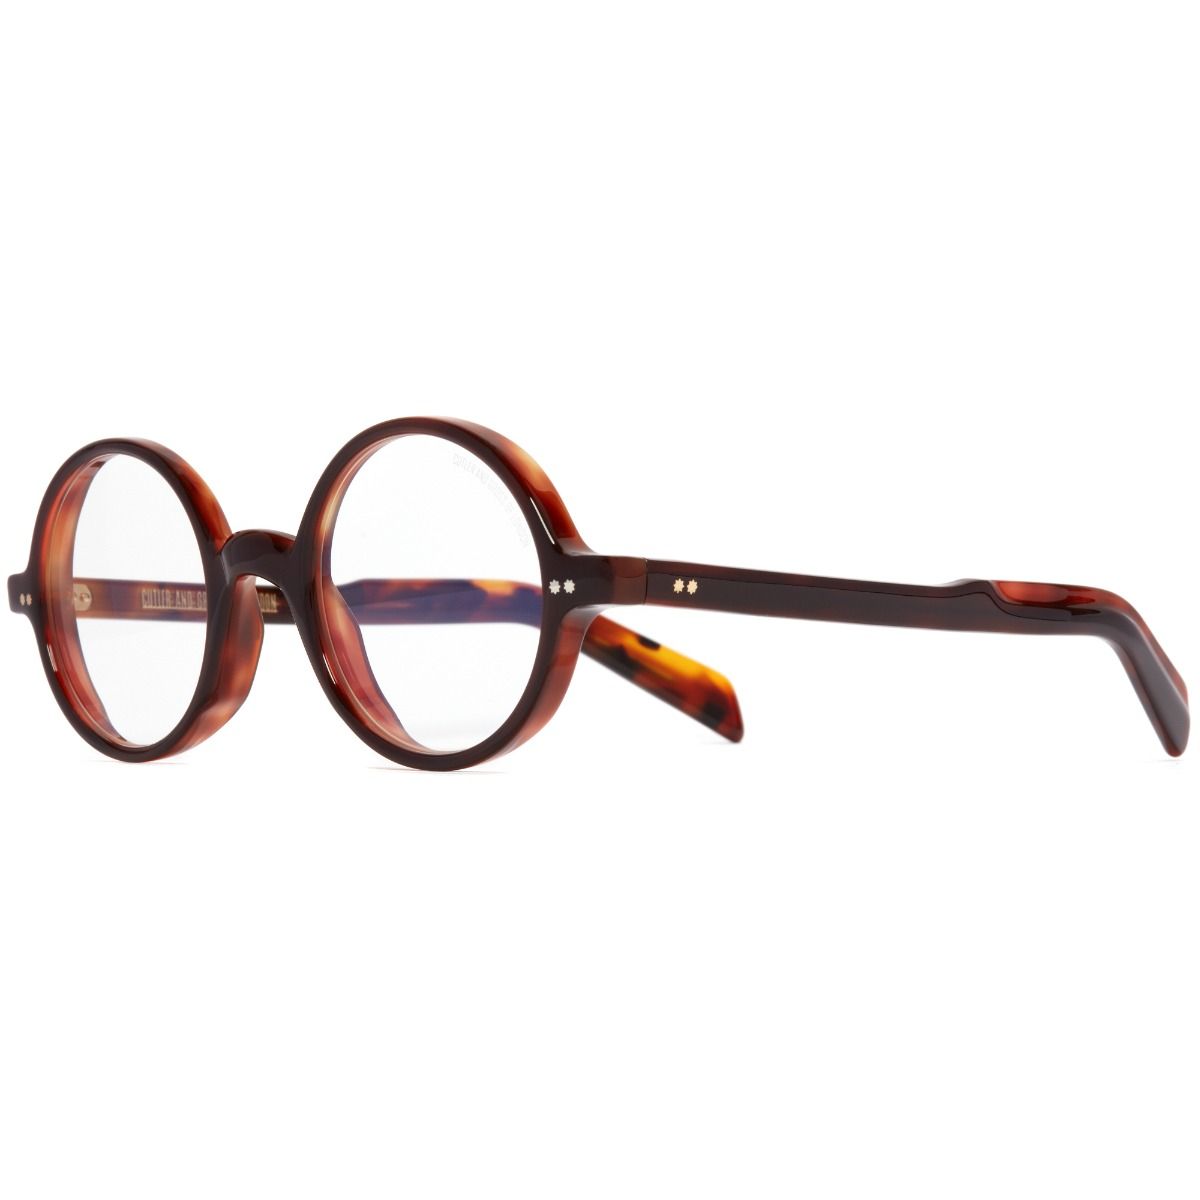 GR01 Round Optical Glasses - Multi Havana Burgundy